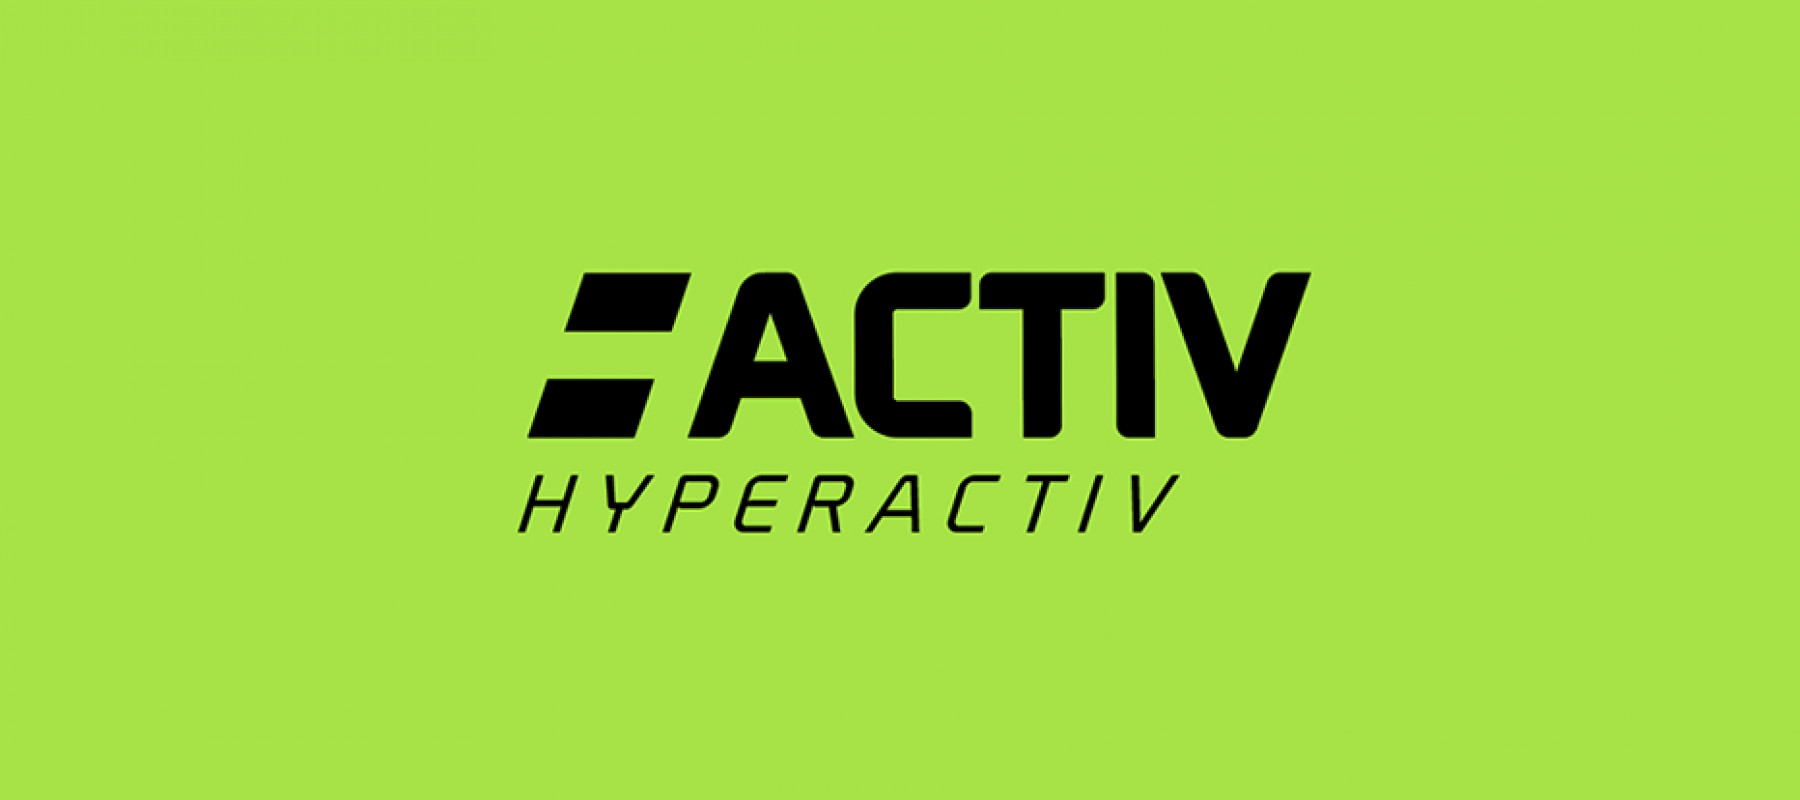 HyperActivelogo